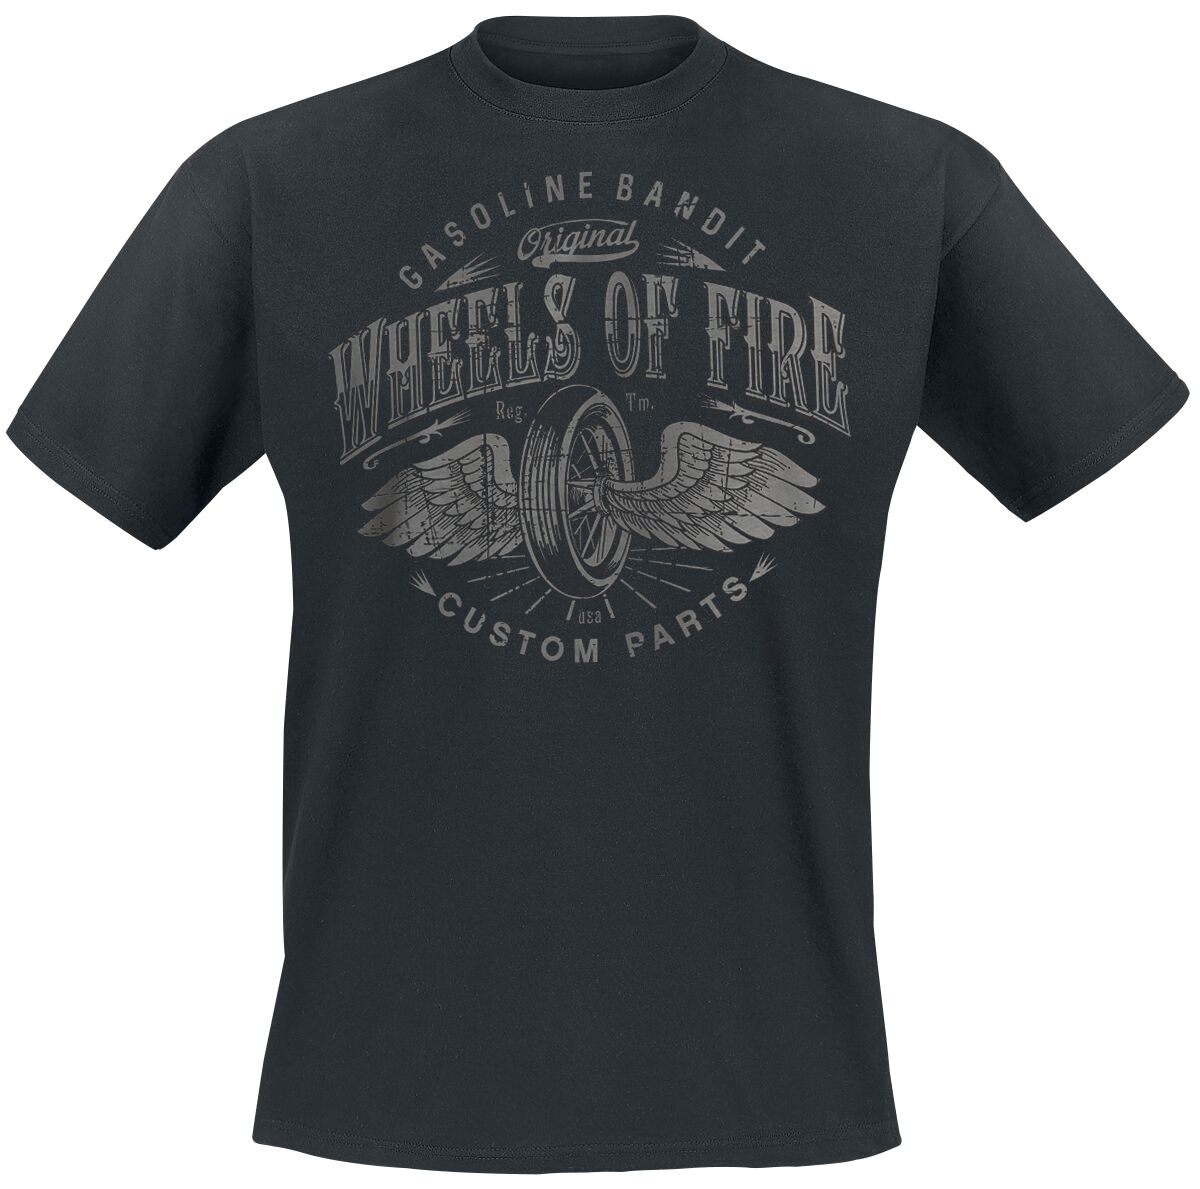 Gasoline Bandit Wheels Of Fire T-Shirt schwarz in S